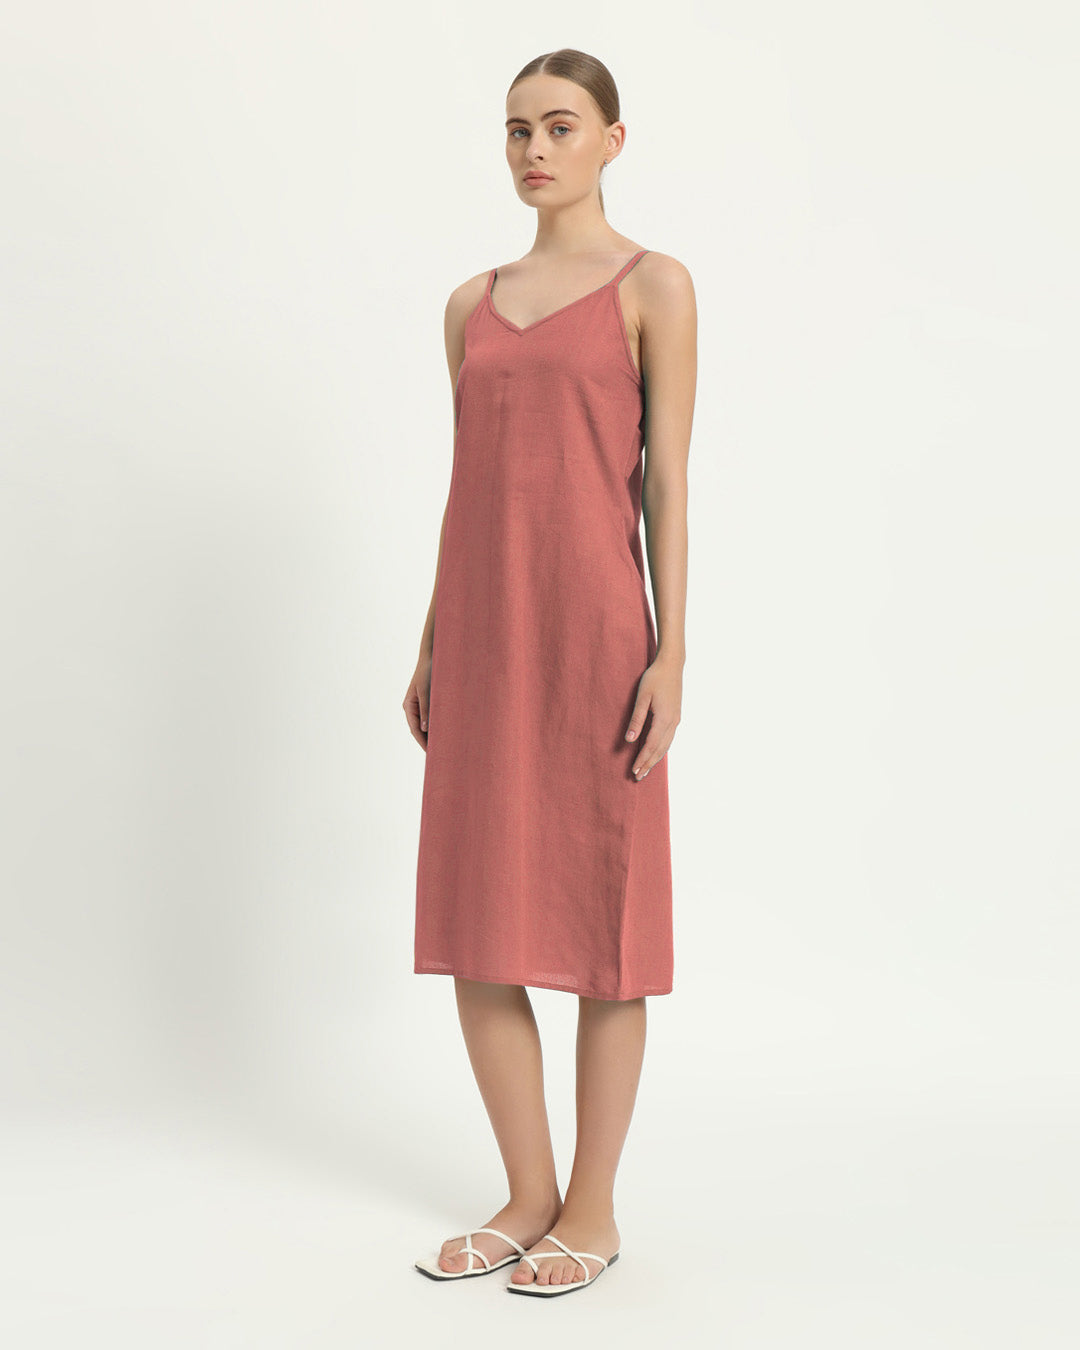 The Seesen Ivory Pink Cotton Dress